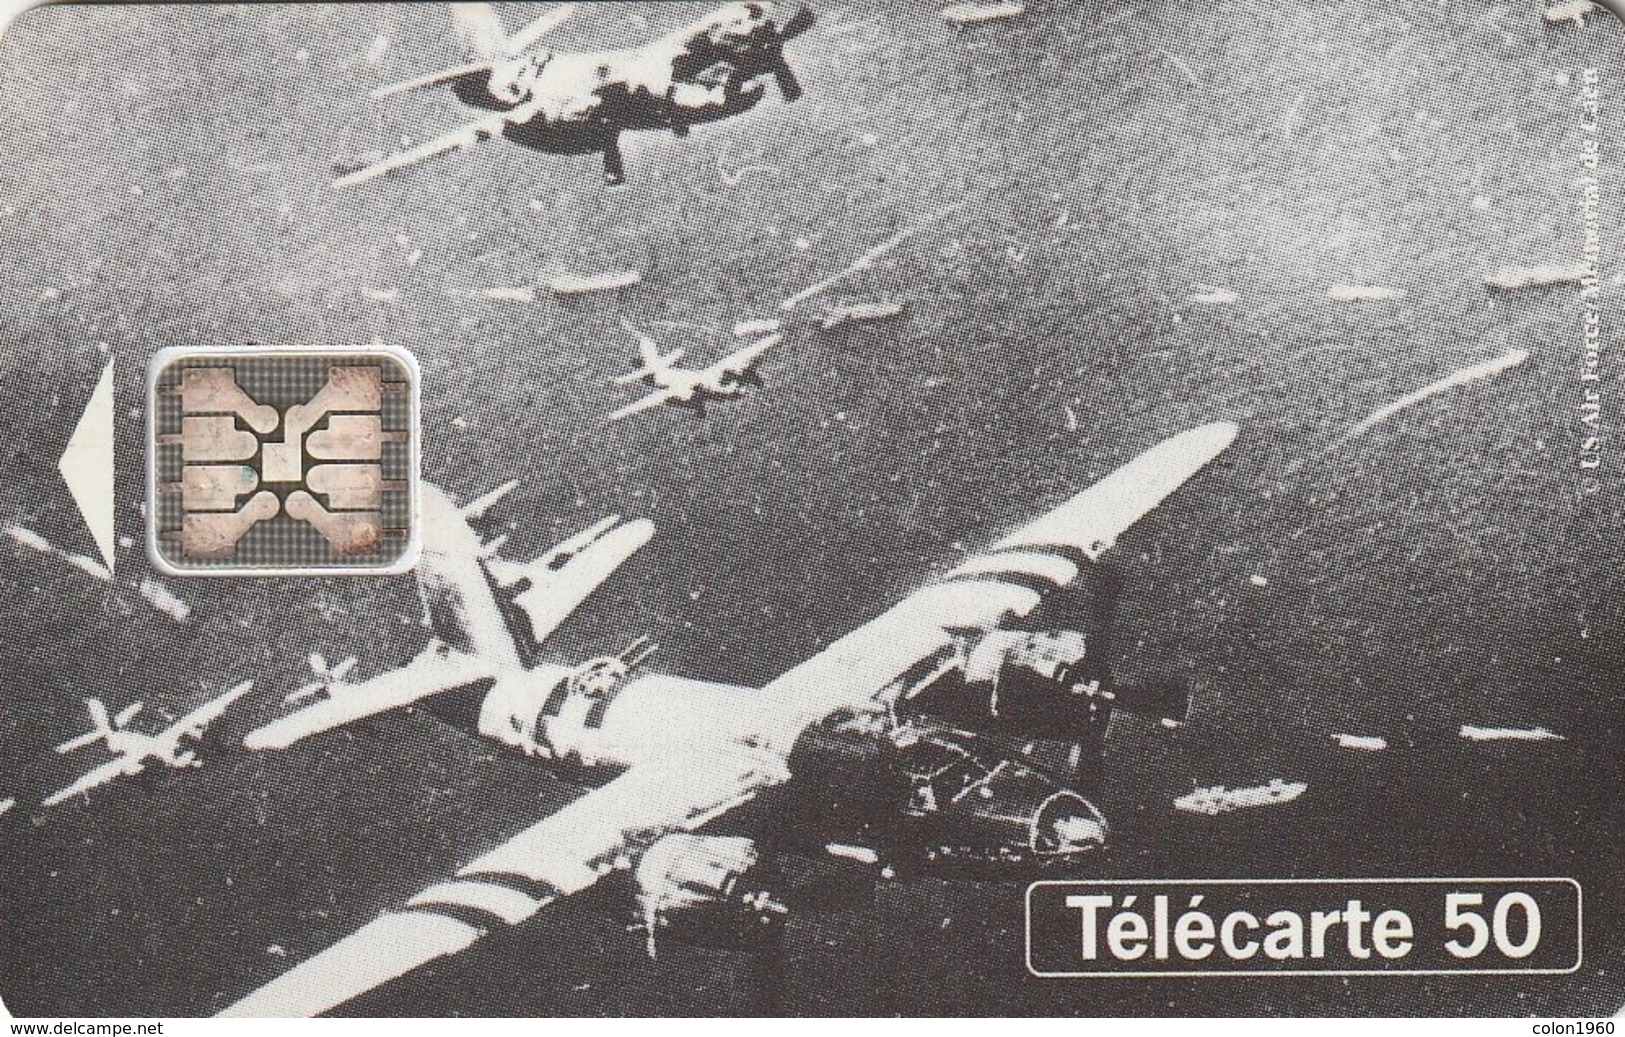 FRANCIA. 50th Anniversary Of Landings And The Liberation Of France. Debarquement Marauders B26. 0475. 06/94. (304). - Armada